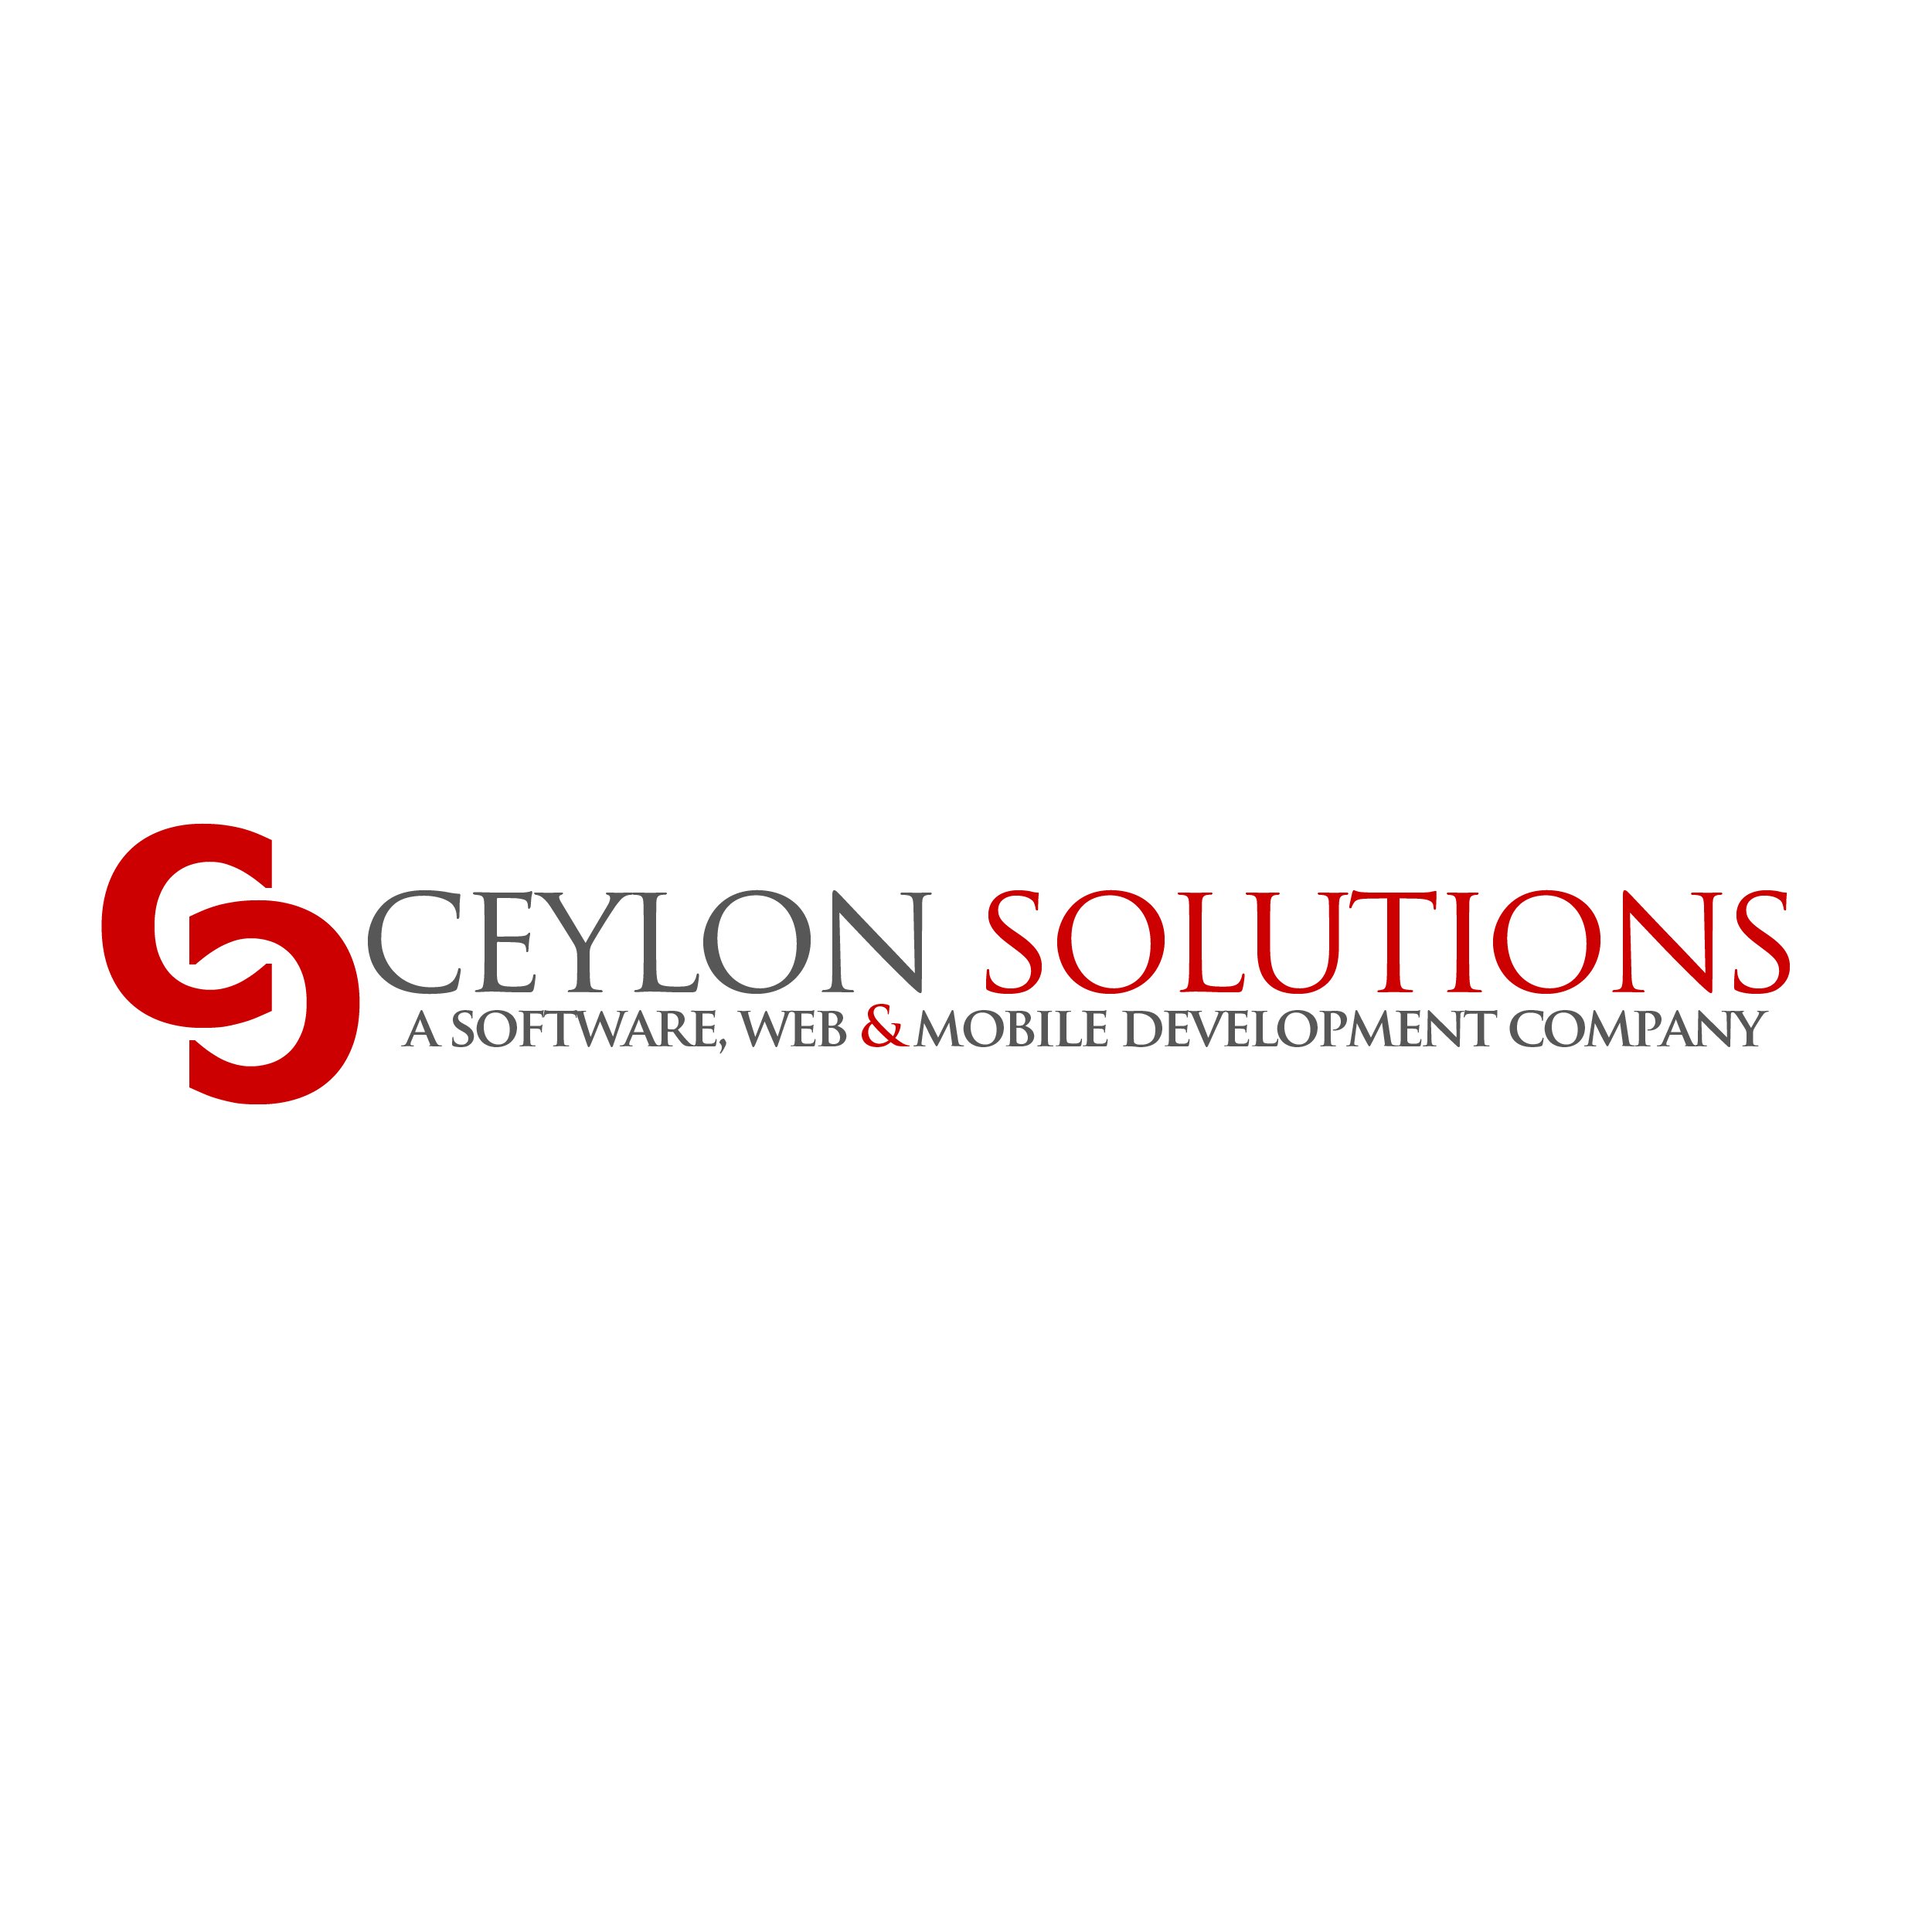 Ceylon Solutions